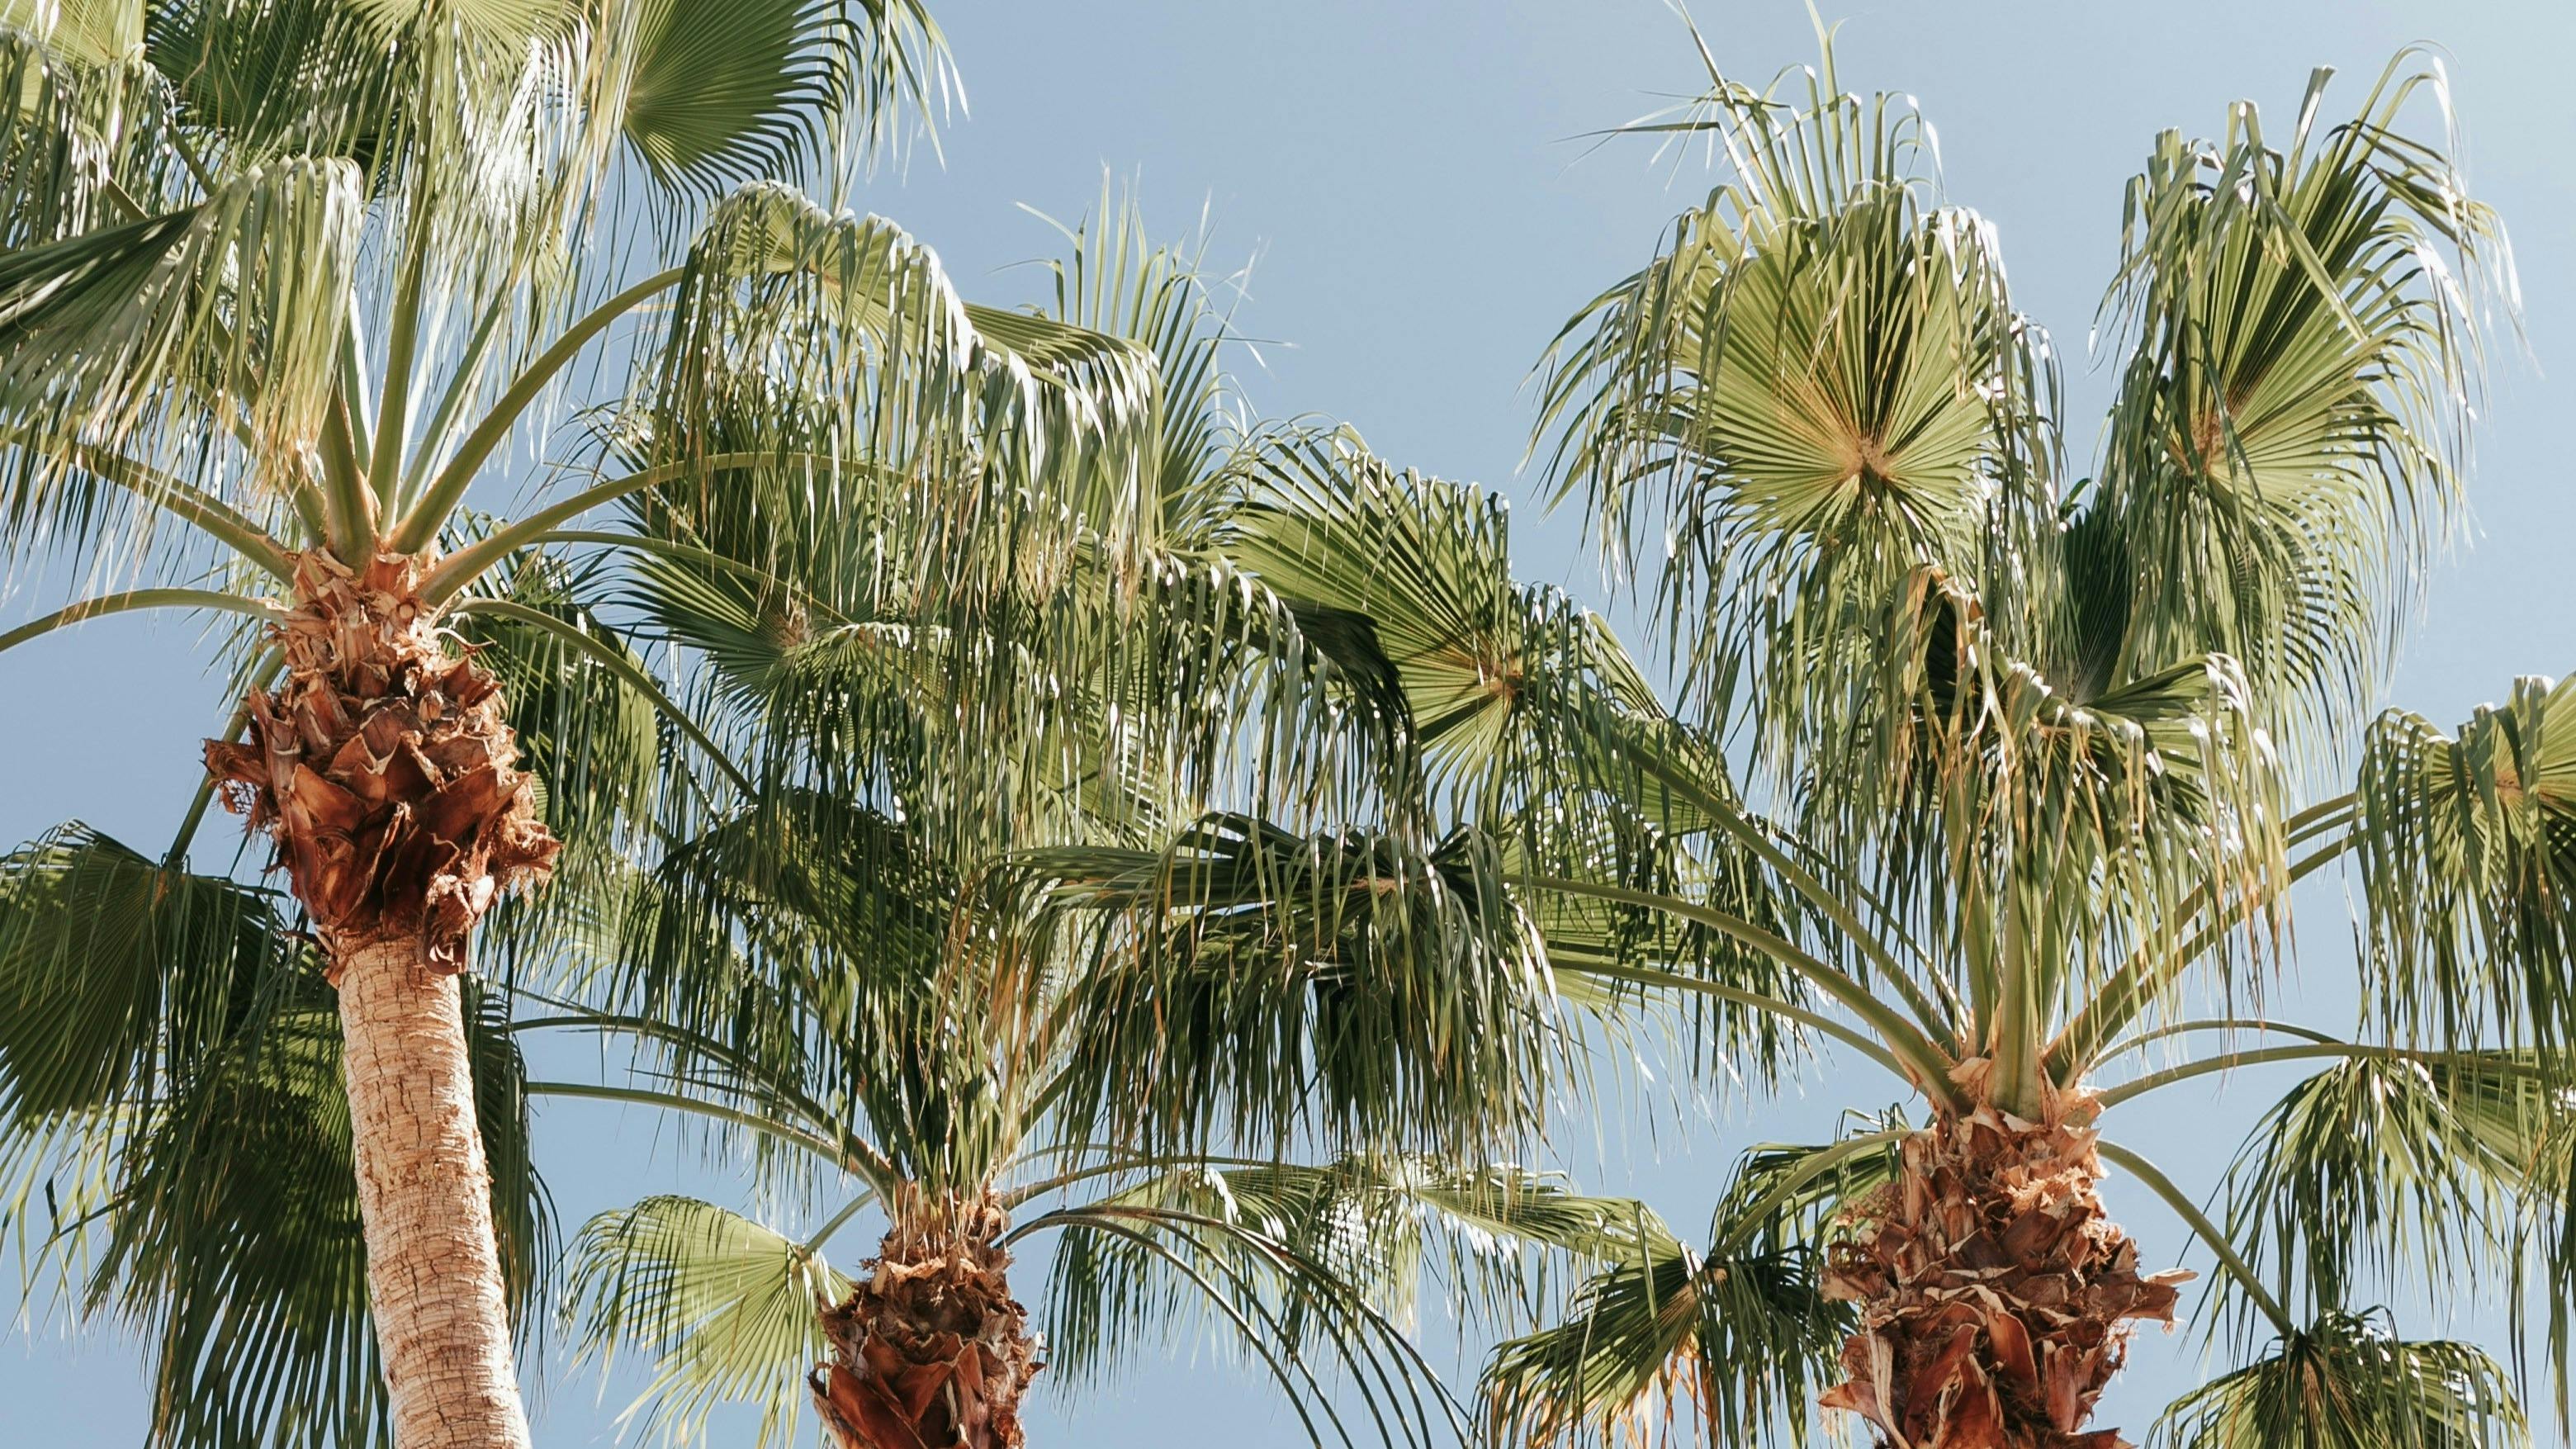 Palm trees against a blue sky.